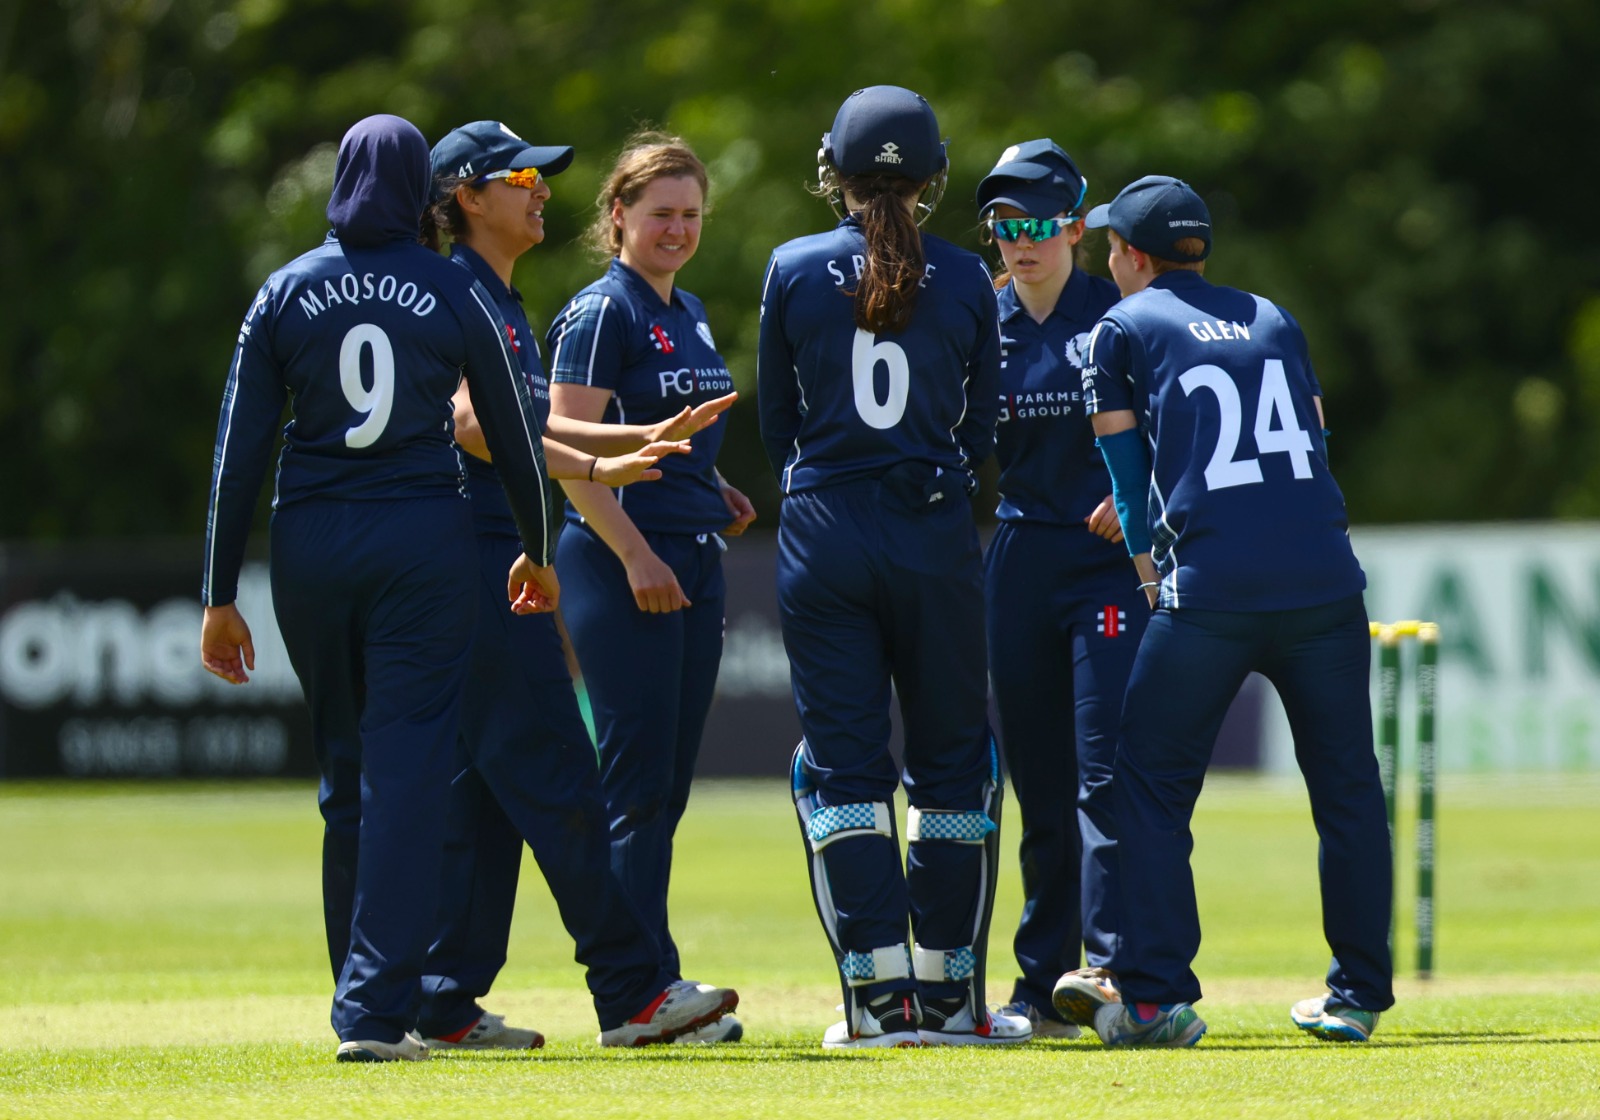 Scotland Women take victory against Ireland on return to international cricket